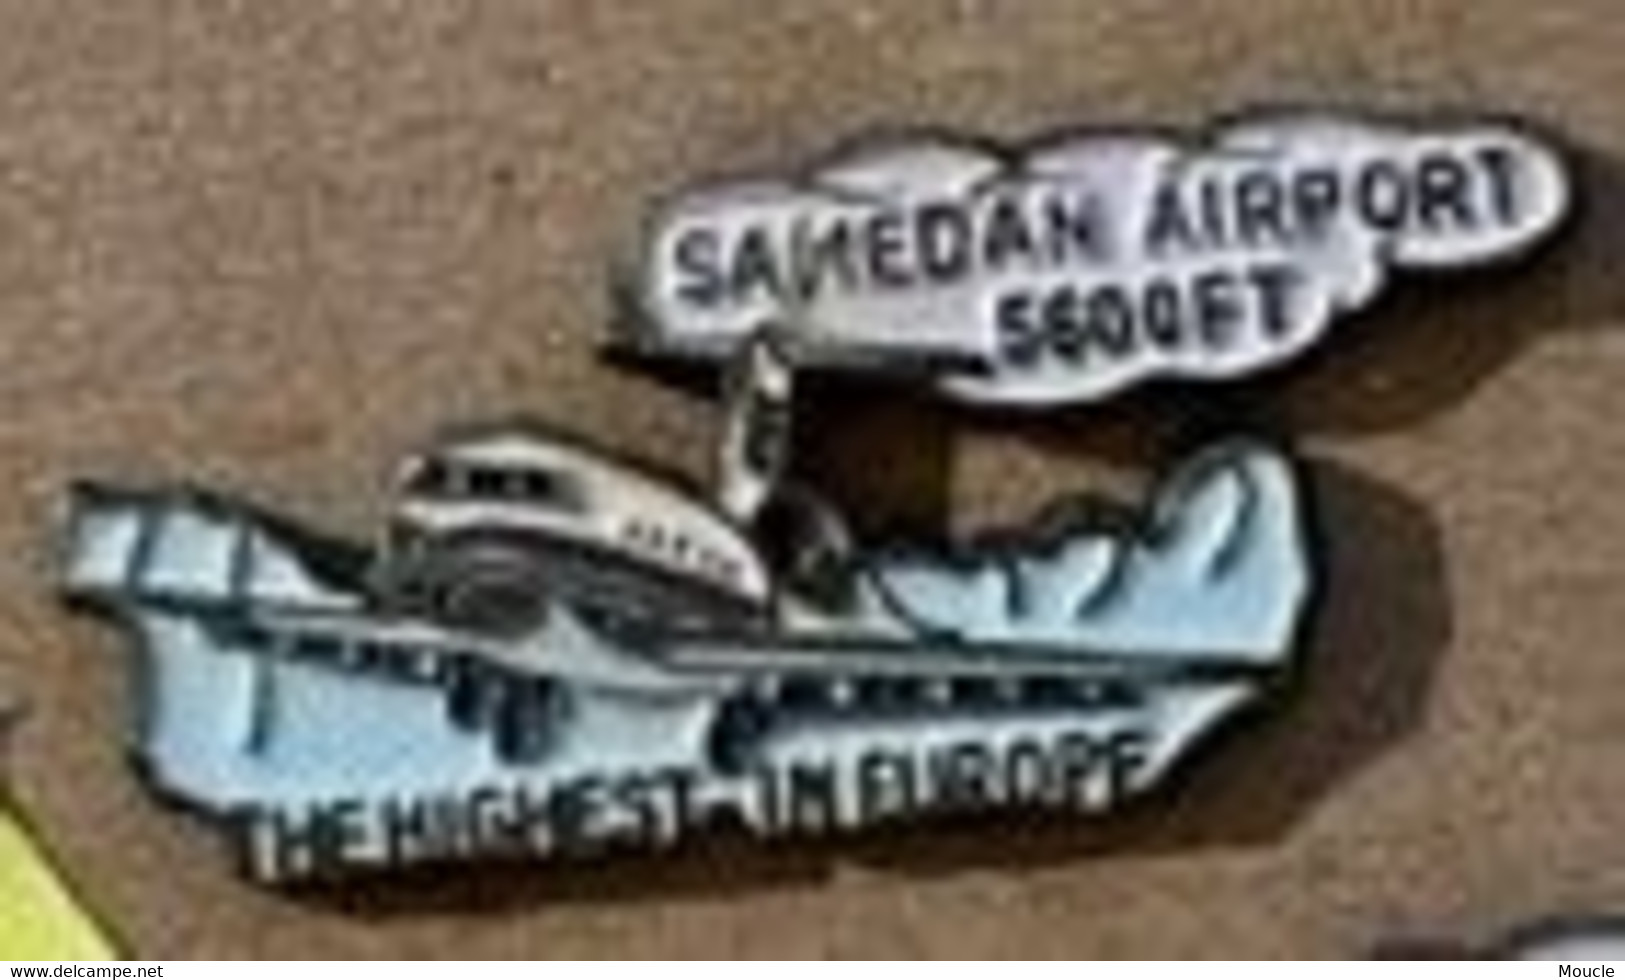 SAMEDAN AIRPORT 5600ft - THE HIGHEST IN EUROPE - PLANE - AVION - FOND BLANC - FLUGZEUG - AEREO-     (24) - Airplanes